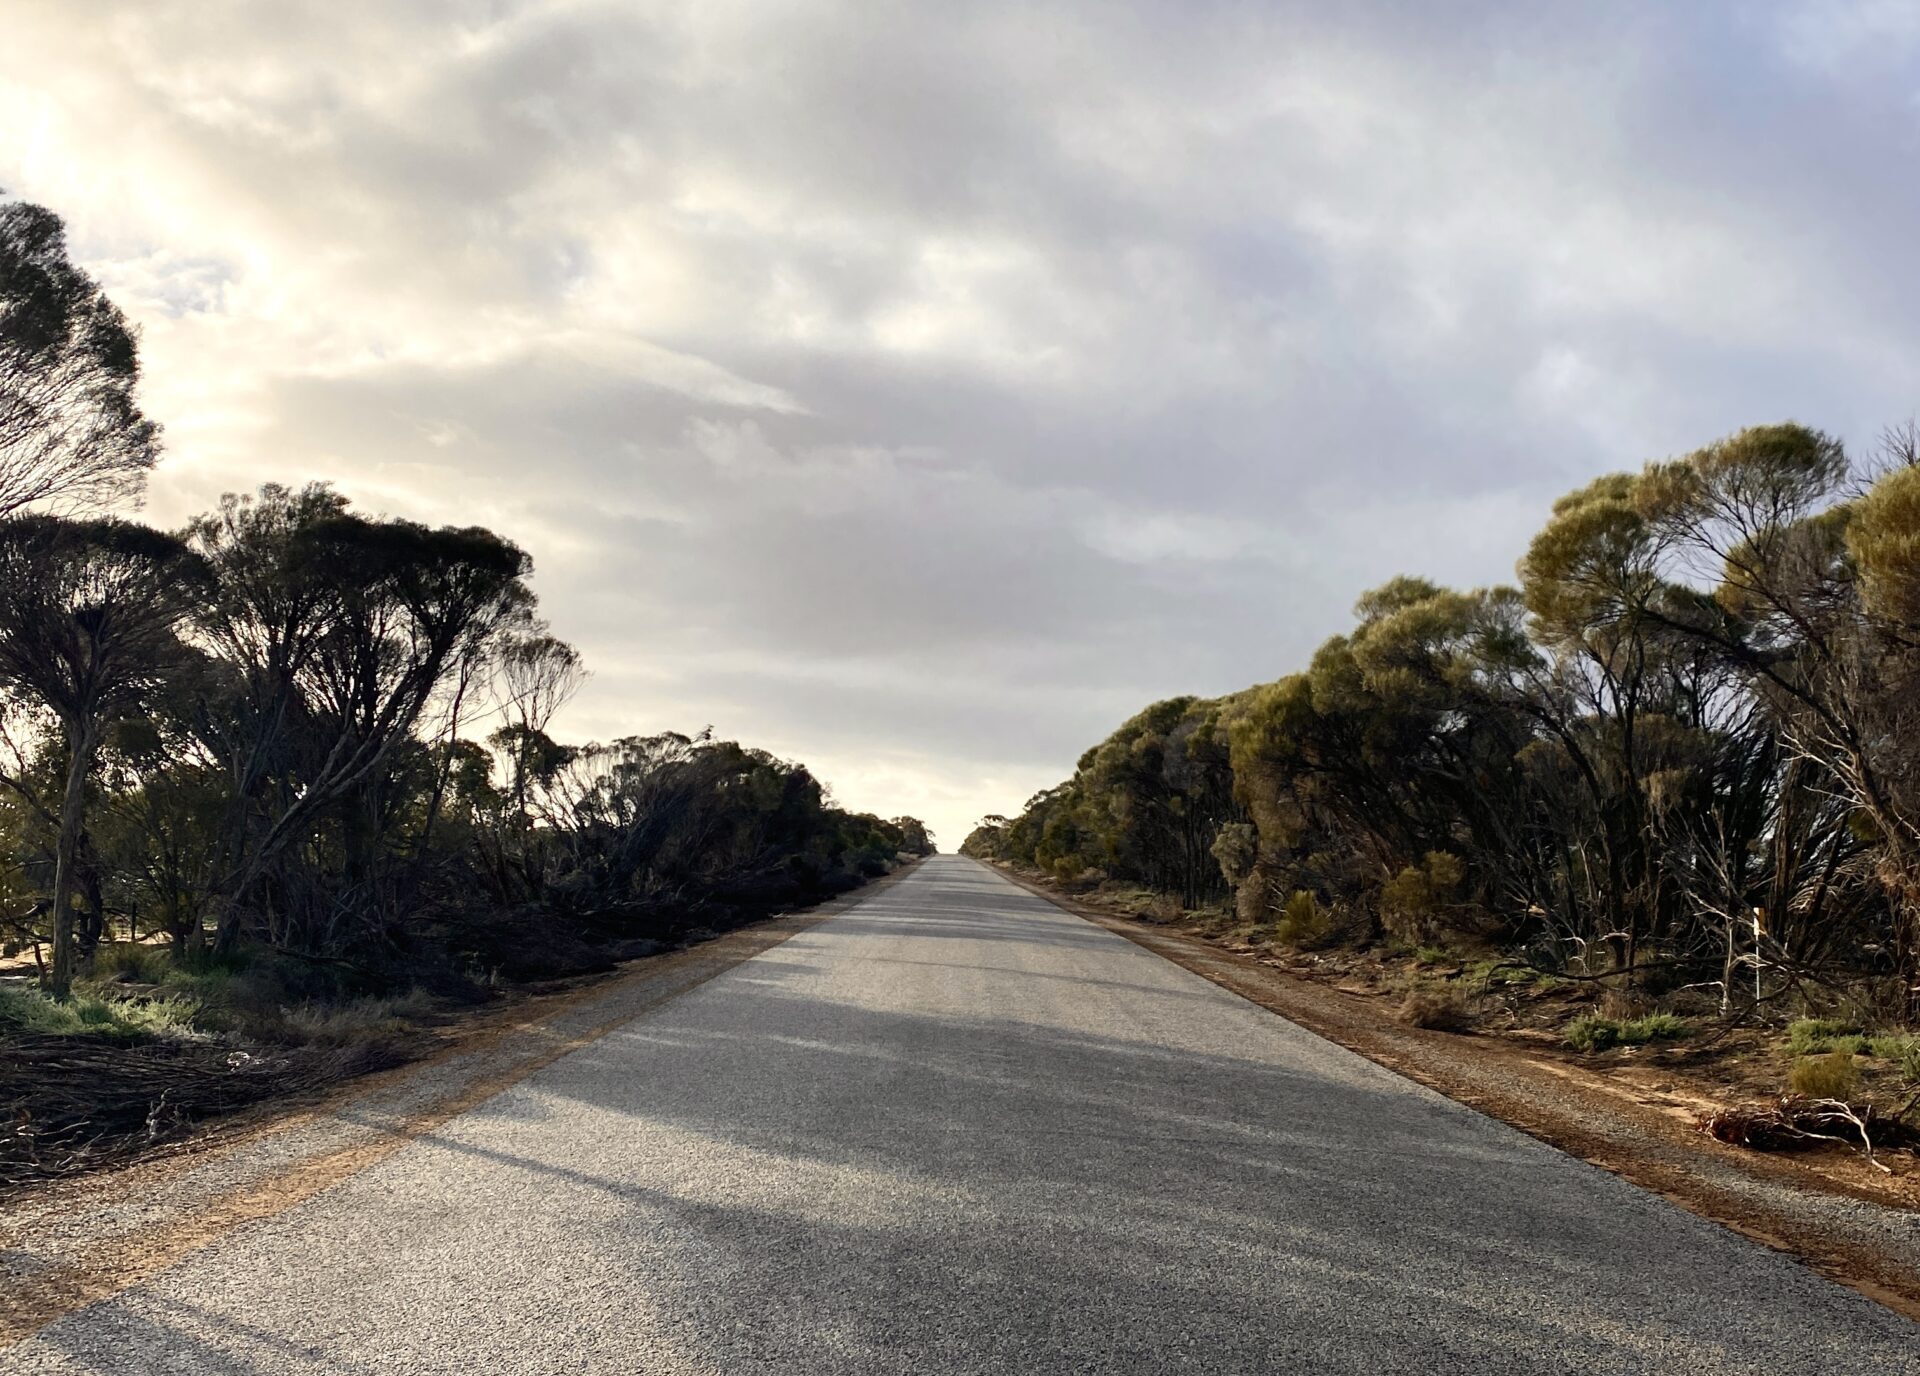 Bitumen road leading towards the horizon with native Australian bush on either side